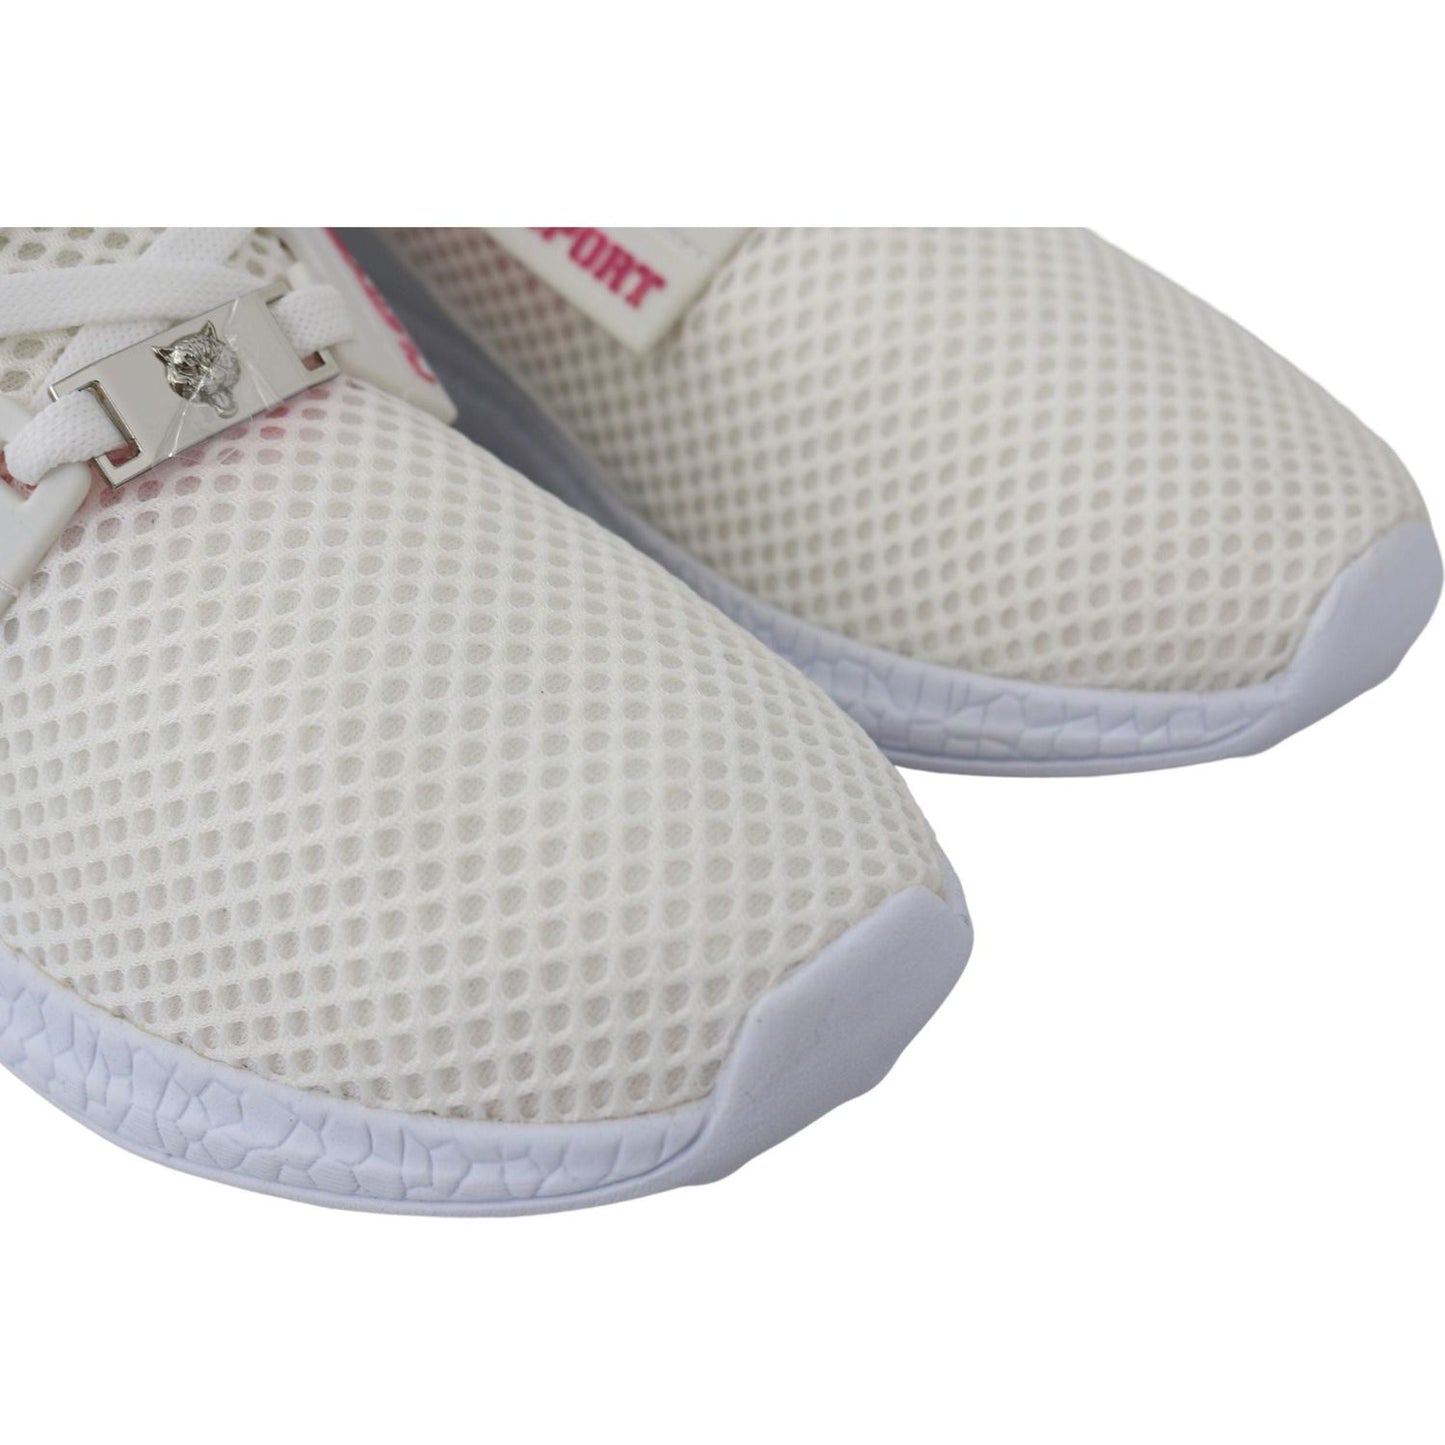 Plein Sport Exclusive White Runner Becky Sneakers white-polyester-runner-becky-sneakers-shoes IMG_2949-scaled-bcdaafd0-60d.jpg